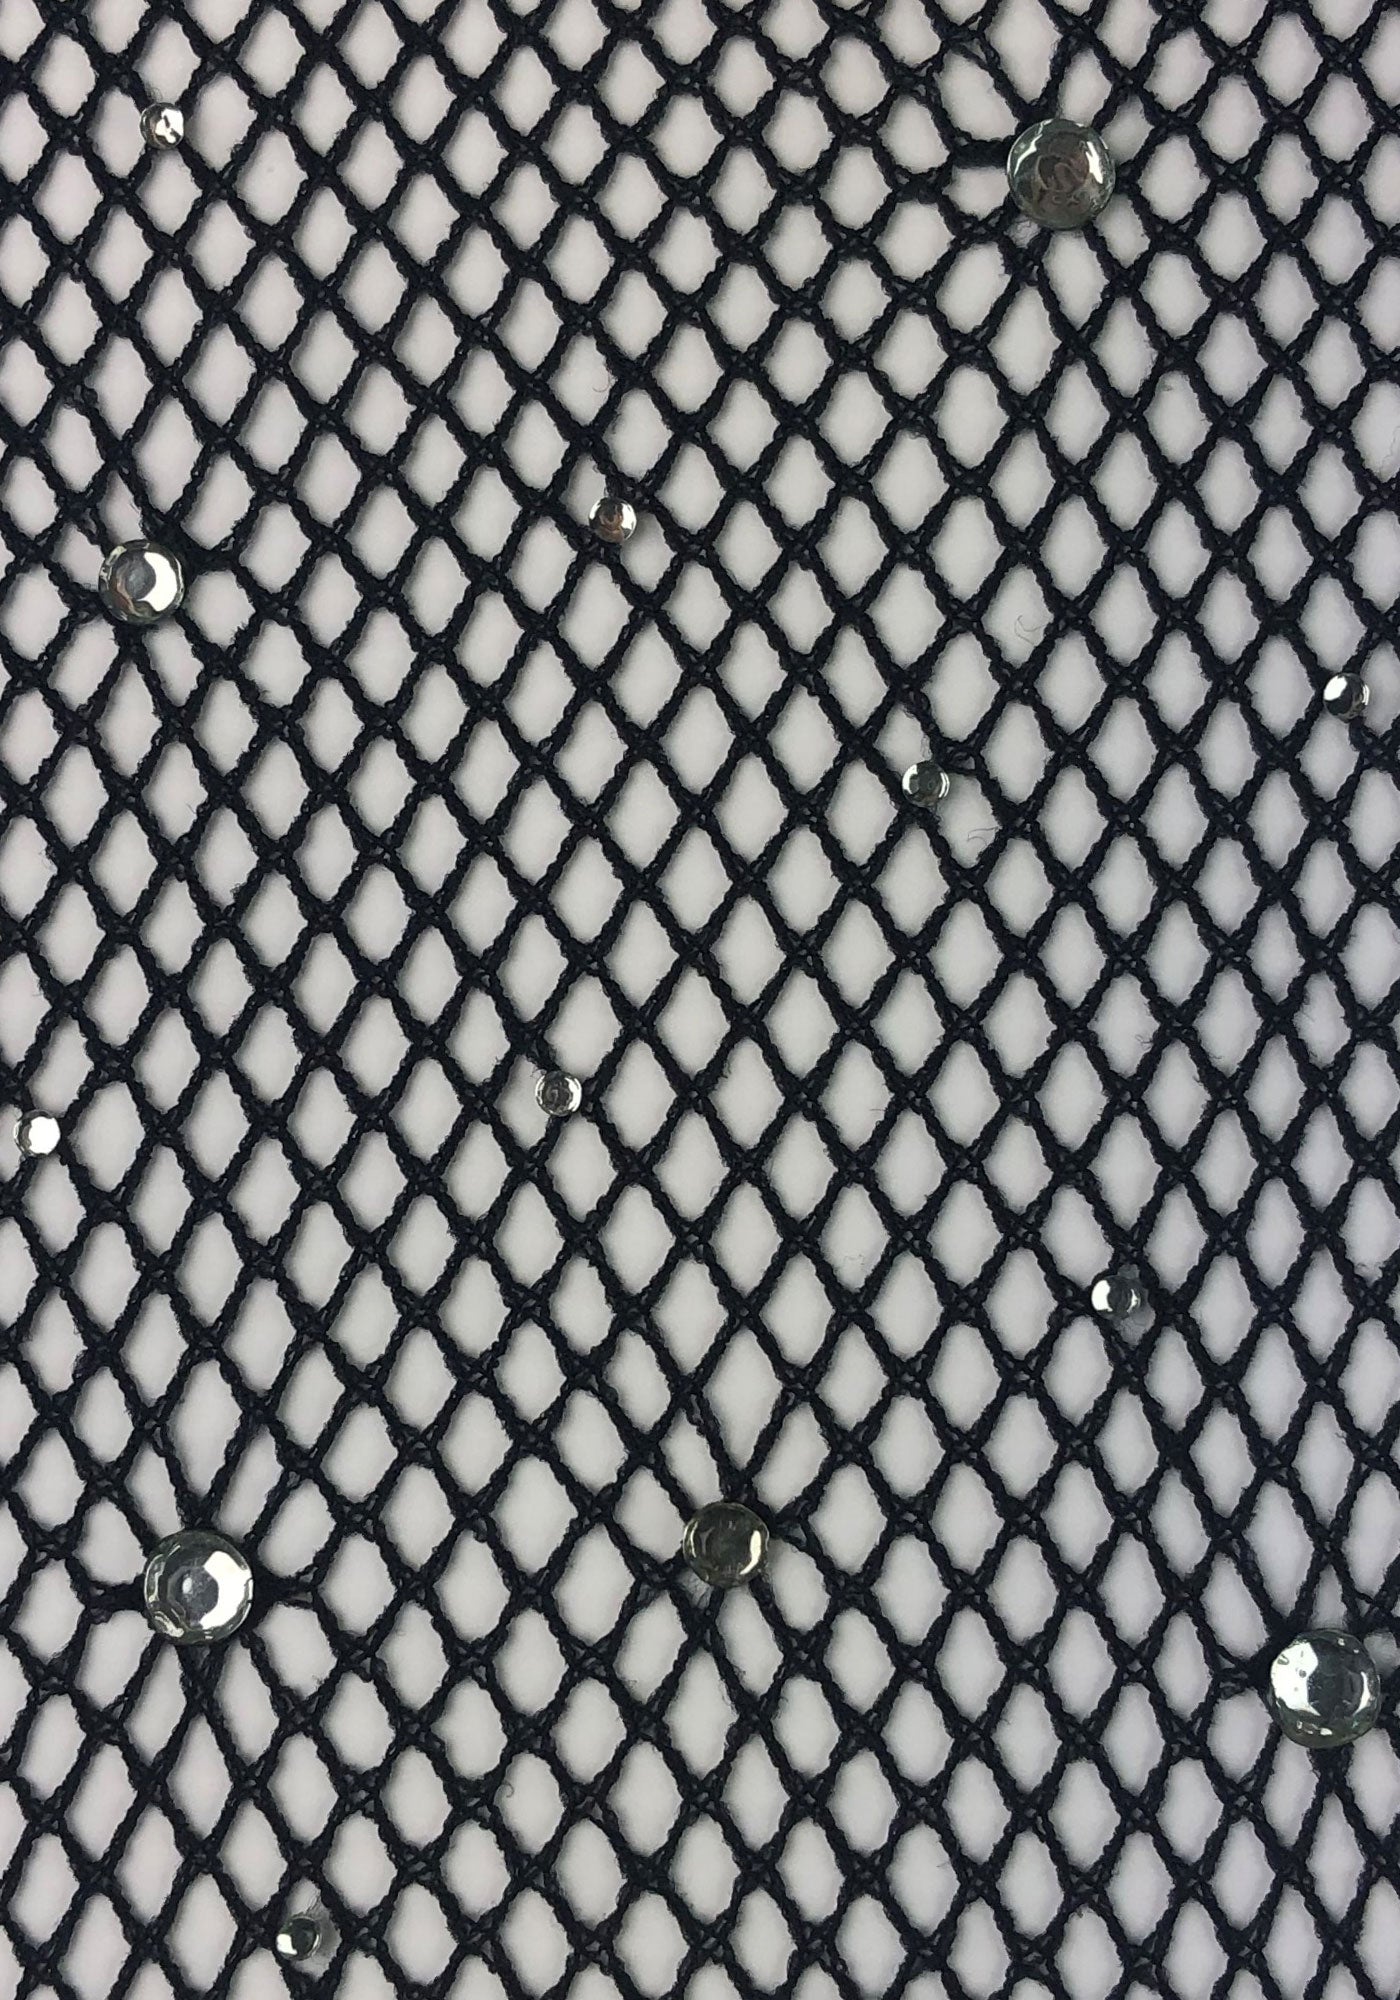 Leg Avenue 9026 Rhinestone micro net tights - black fishnet with sparkly iridescent gems